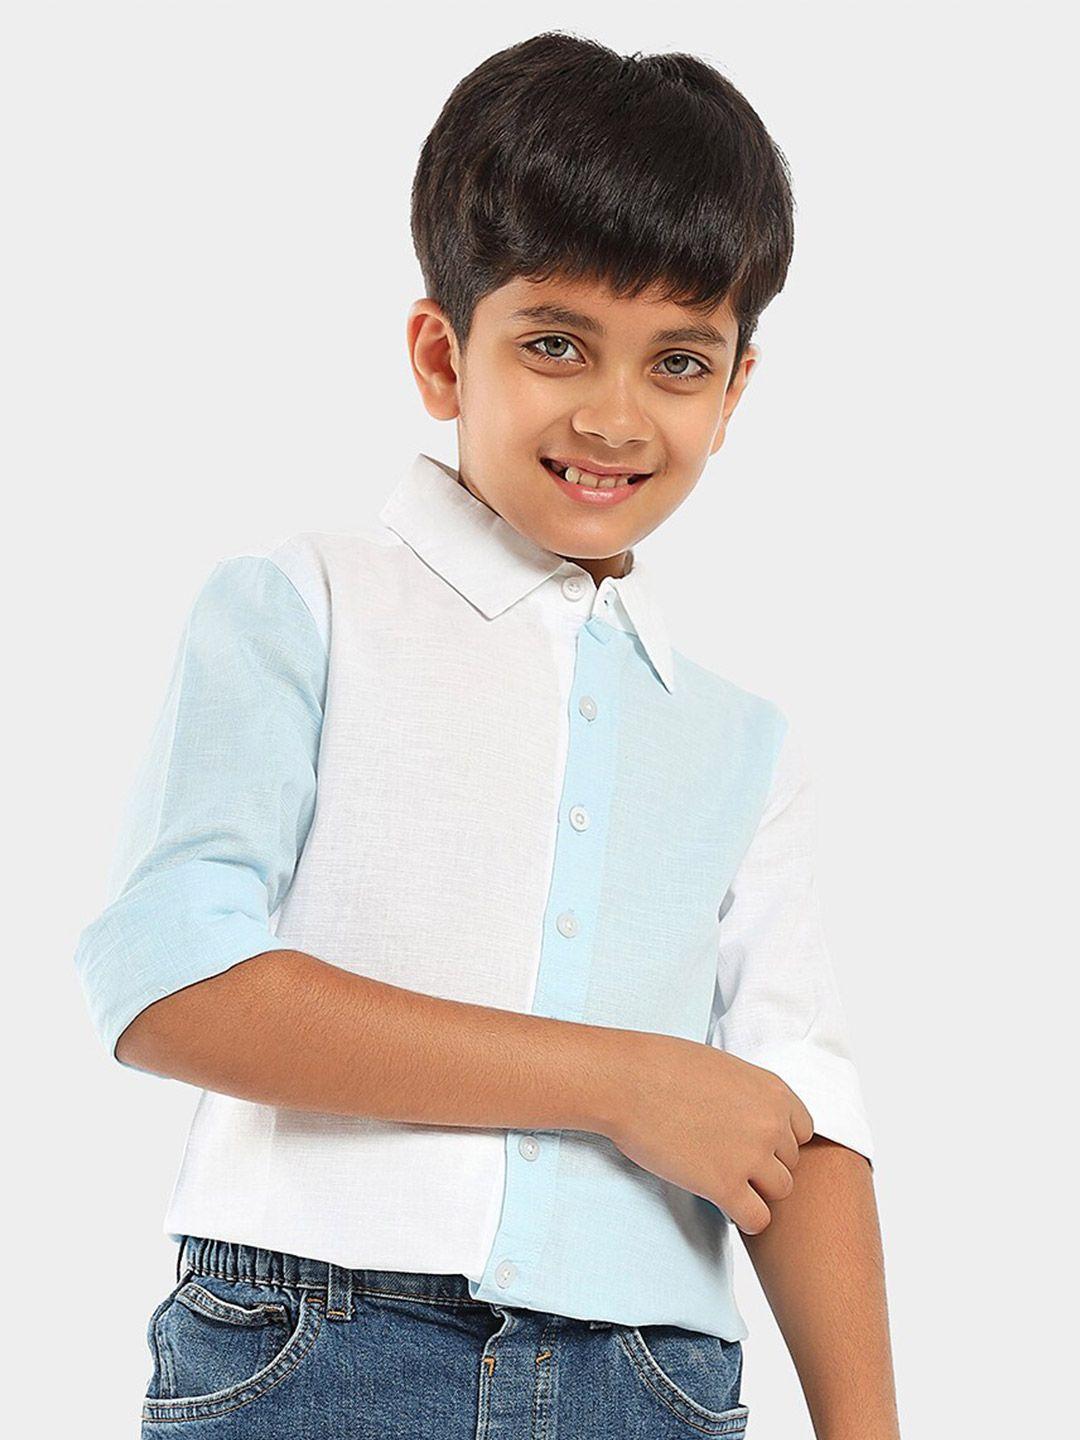 lilpicks-boys-colourblocked-spread-collar-cotton-smart-casual-shirt